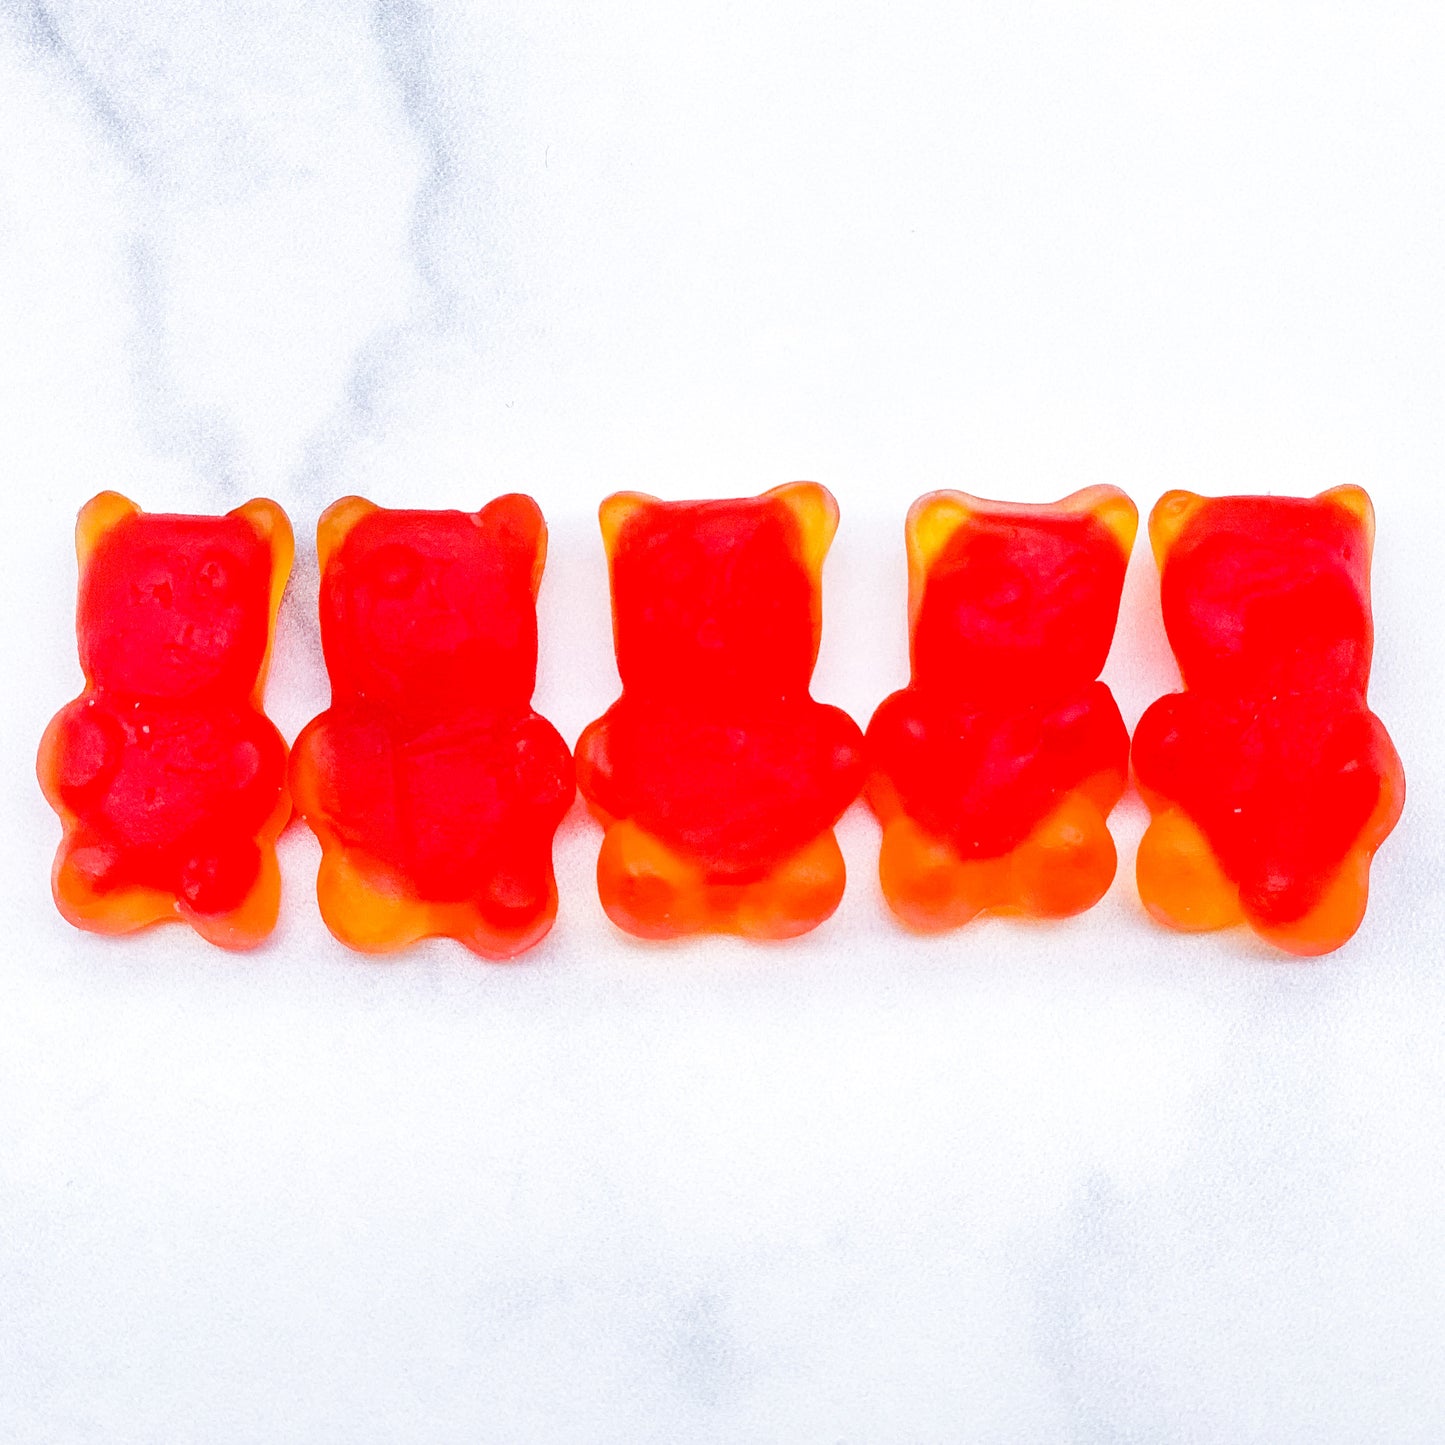 Gummi Bears - Filled